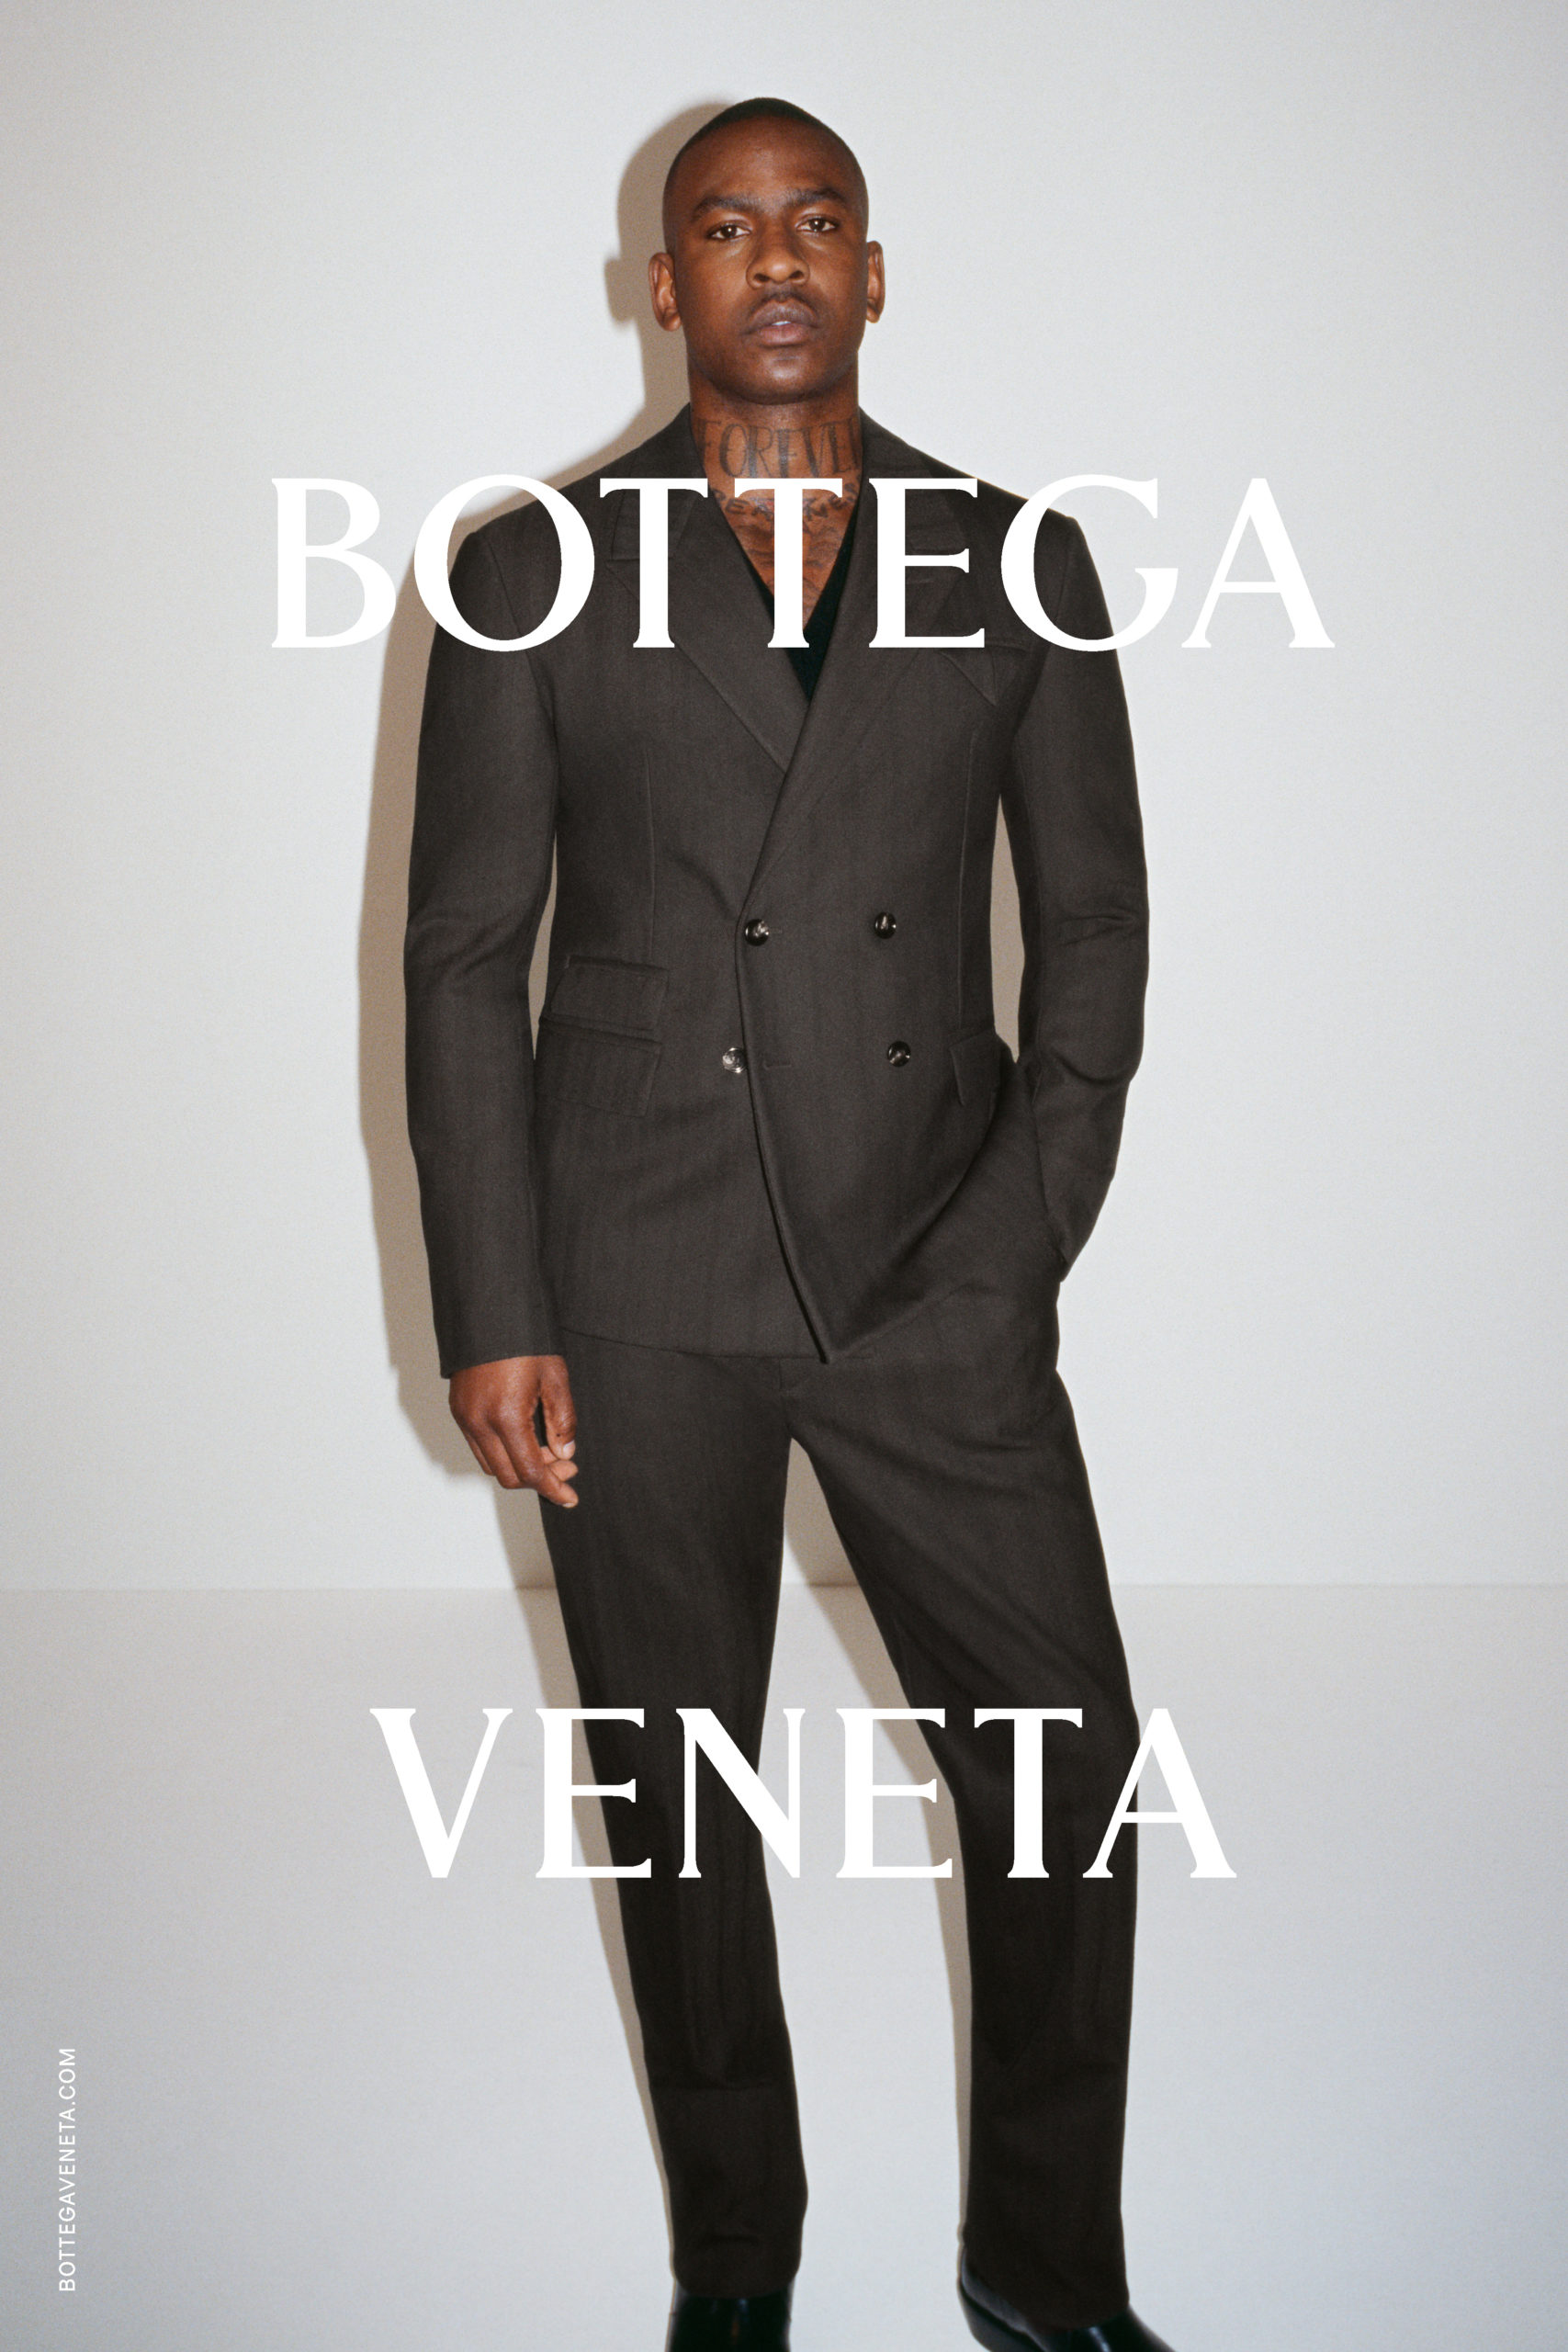 6 Celebrities Who Love Bottega Veneta